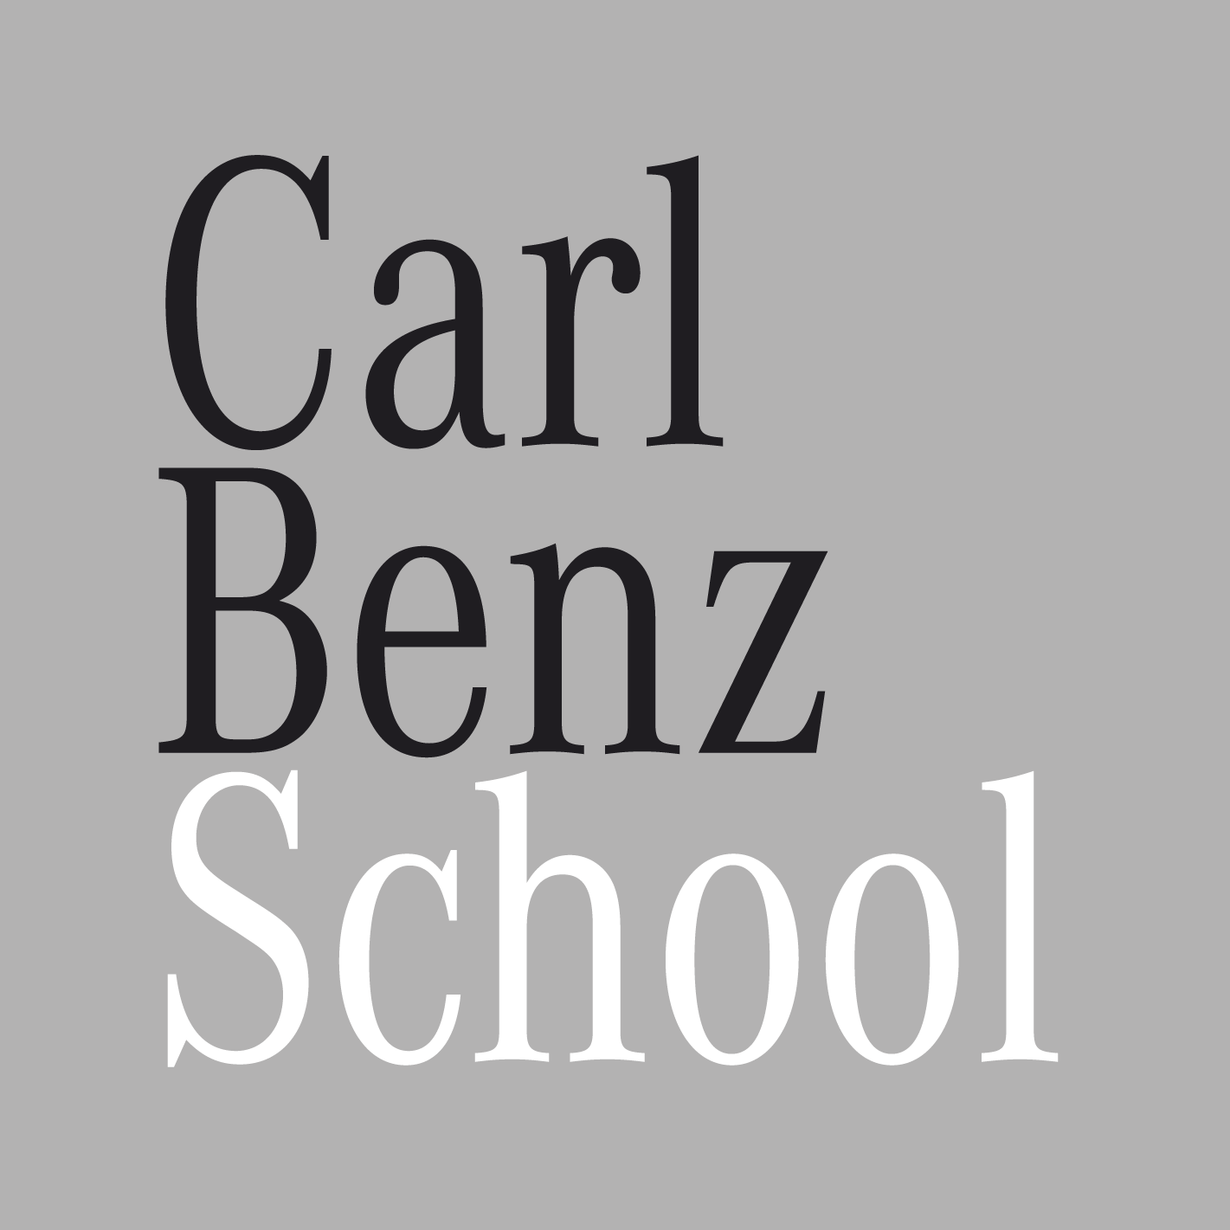 contact us, CBS team, Carl Benz School